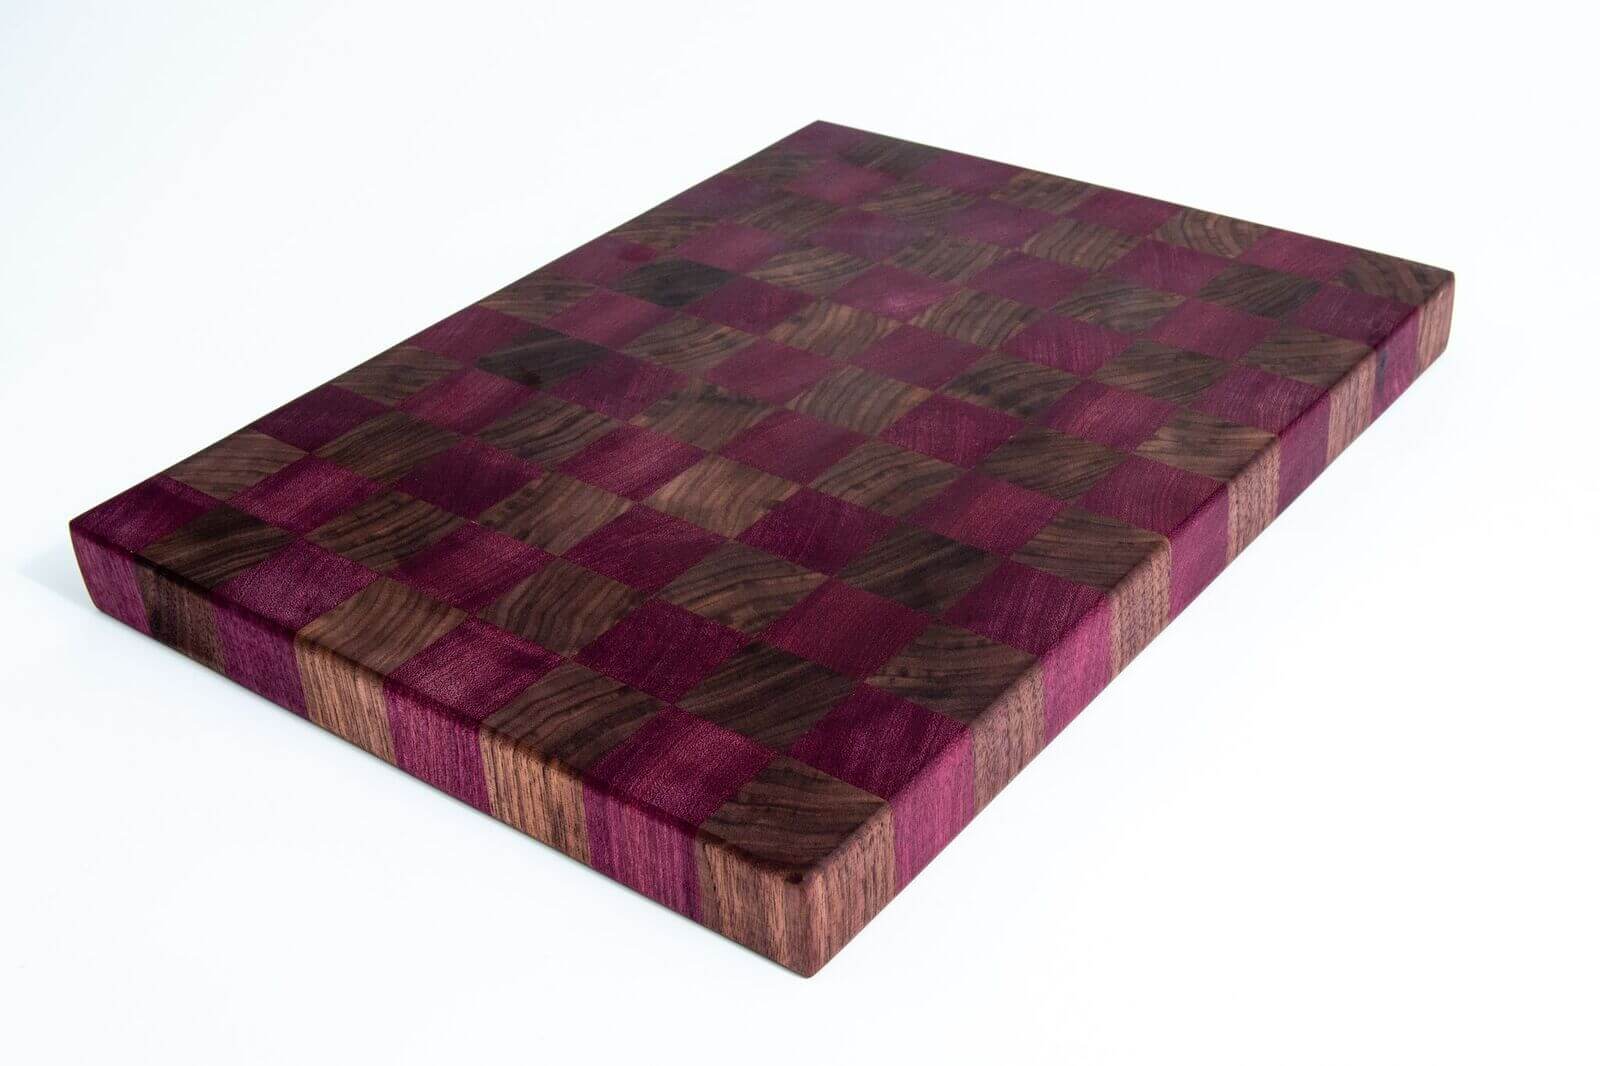 Checkered Walnut and Purple Heart End Grain Cutting Board